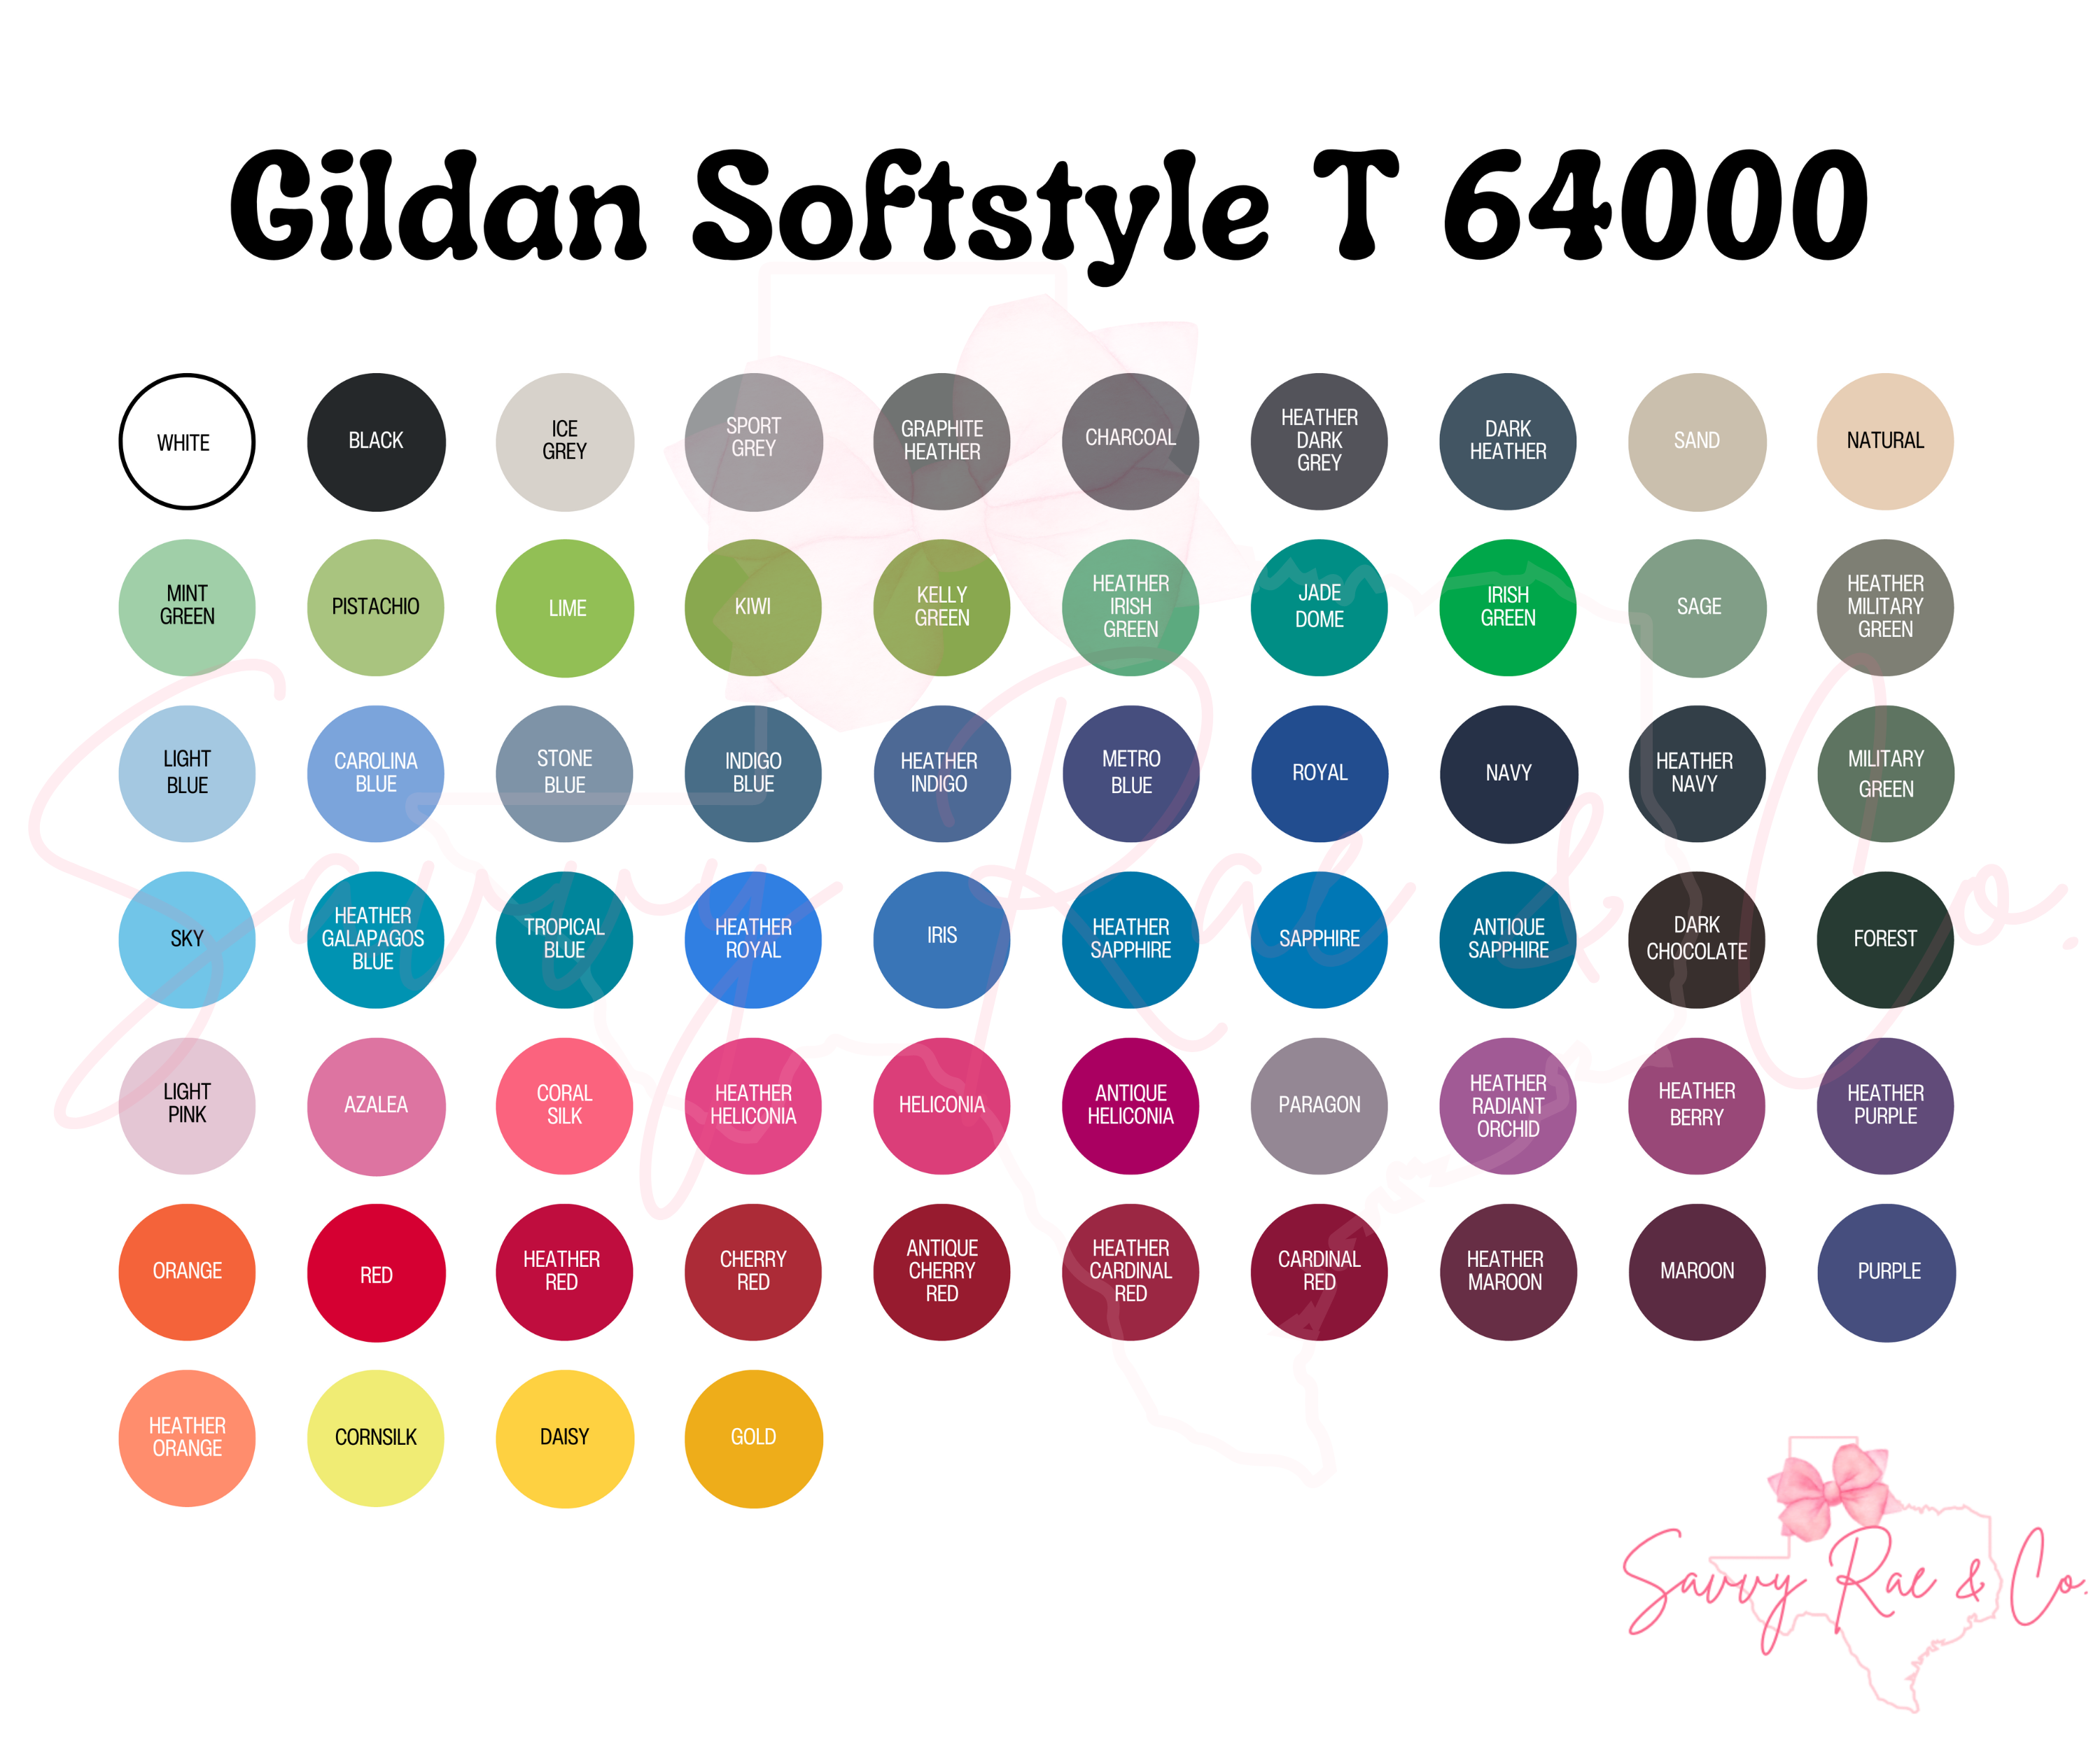 Sideline Social Club - Gildan Softstyle Shirts